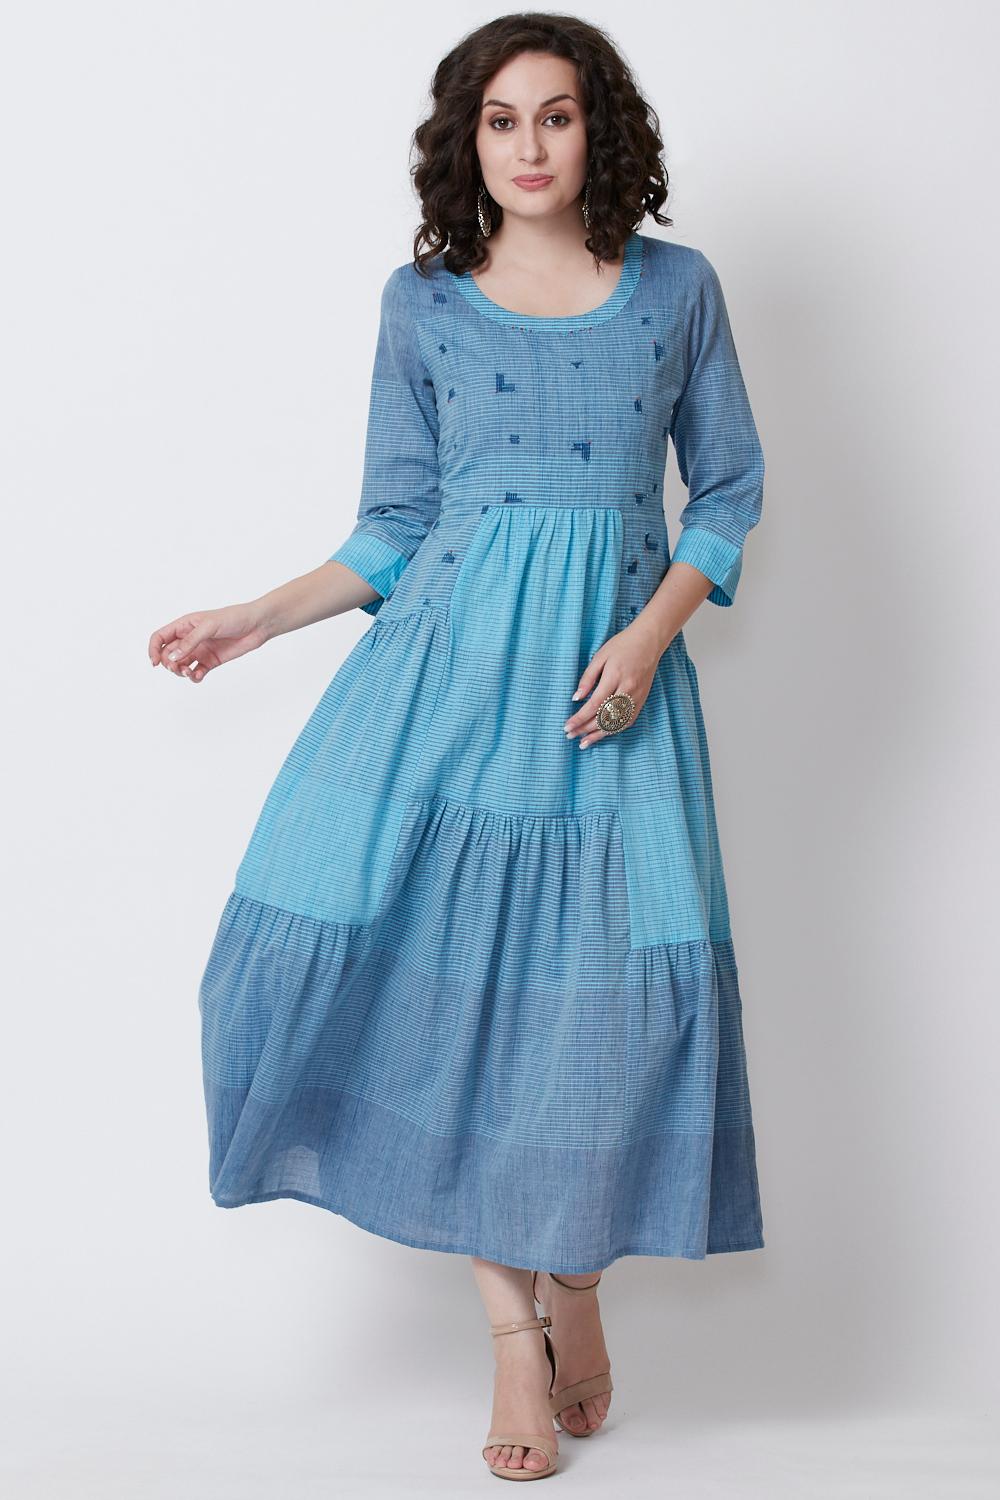 Buy Online Blue Flared Cotton Dress for Women & Girls at Best ...